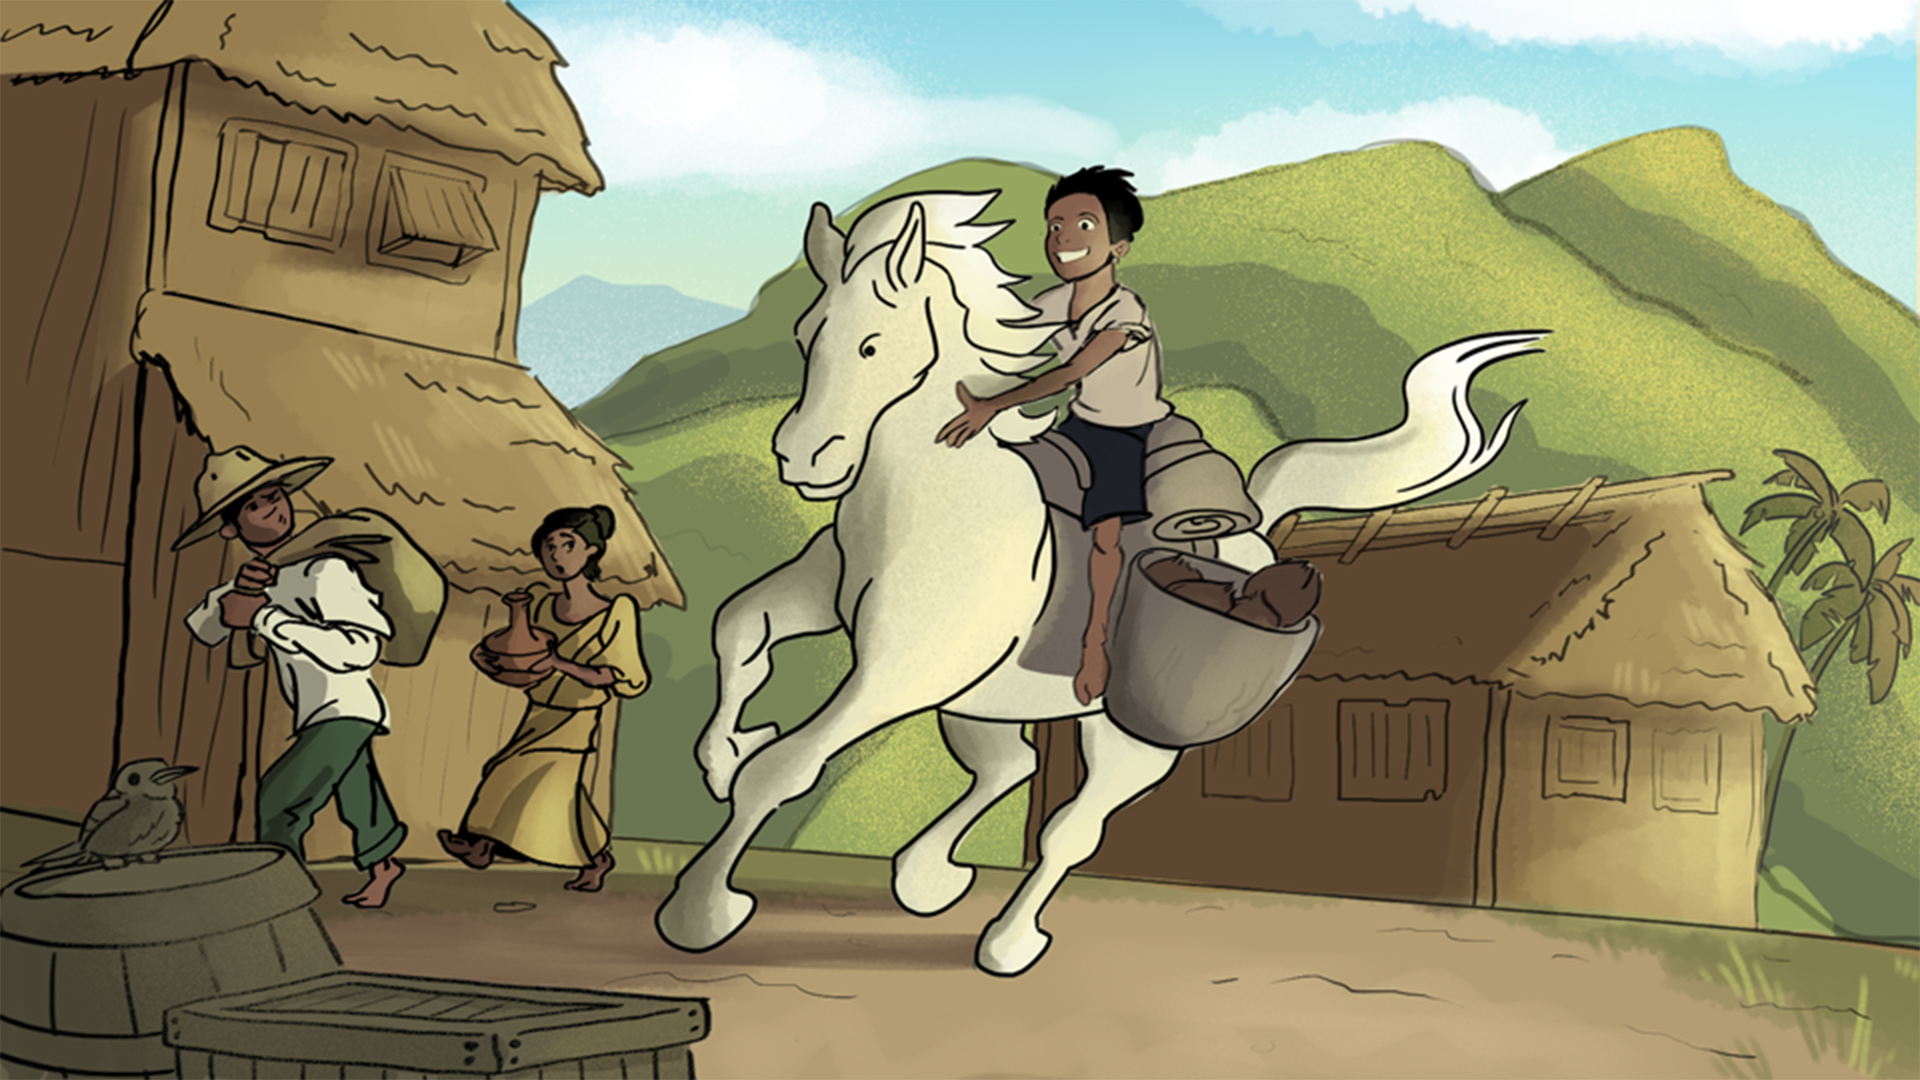 Illustration of Guerrilla riding a horse